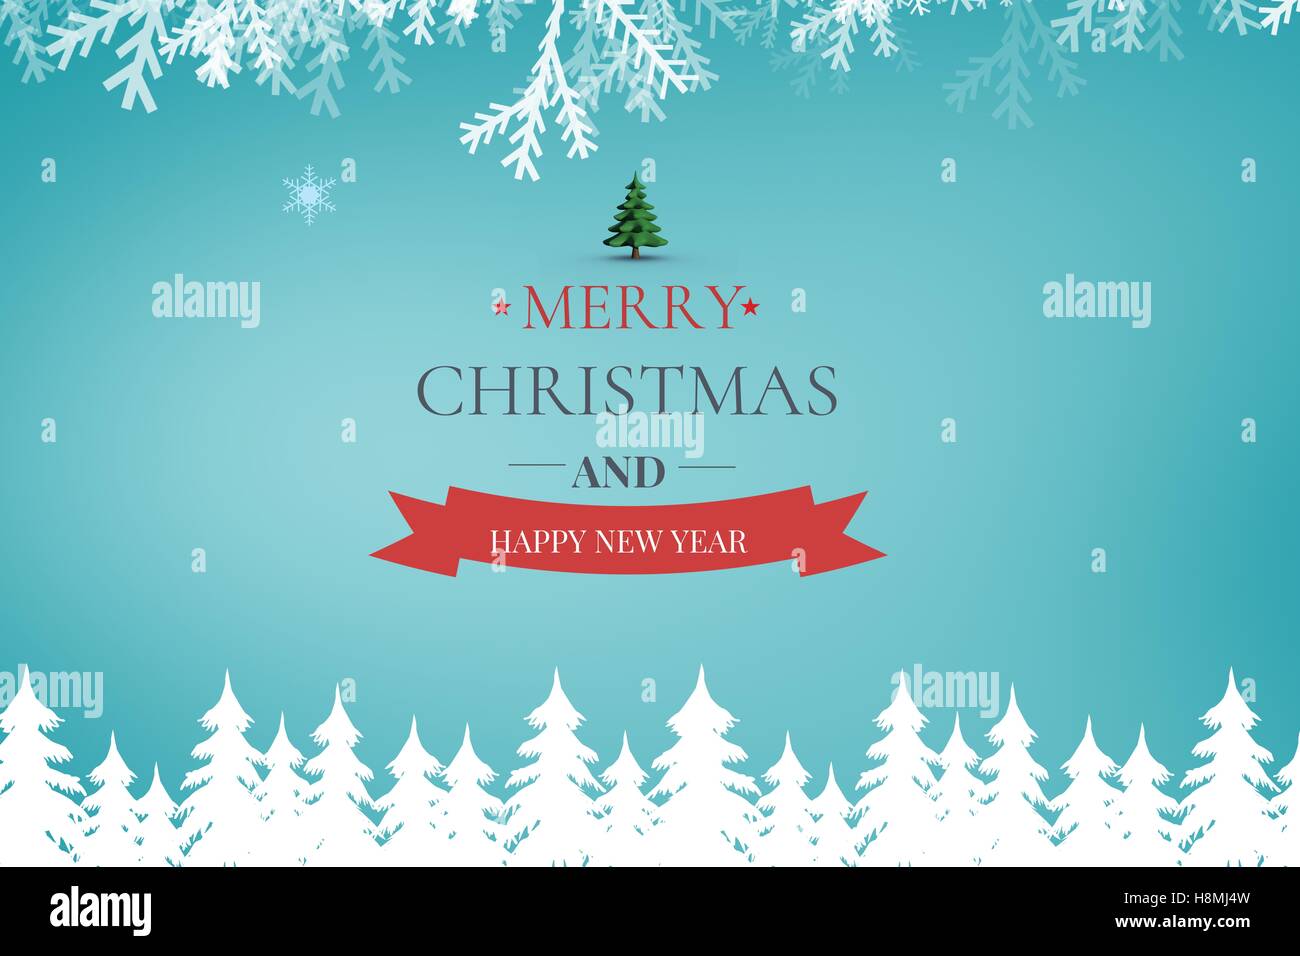 Christmas Message Design Stock Photo